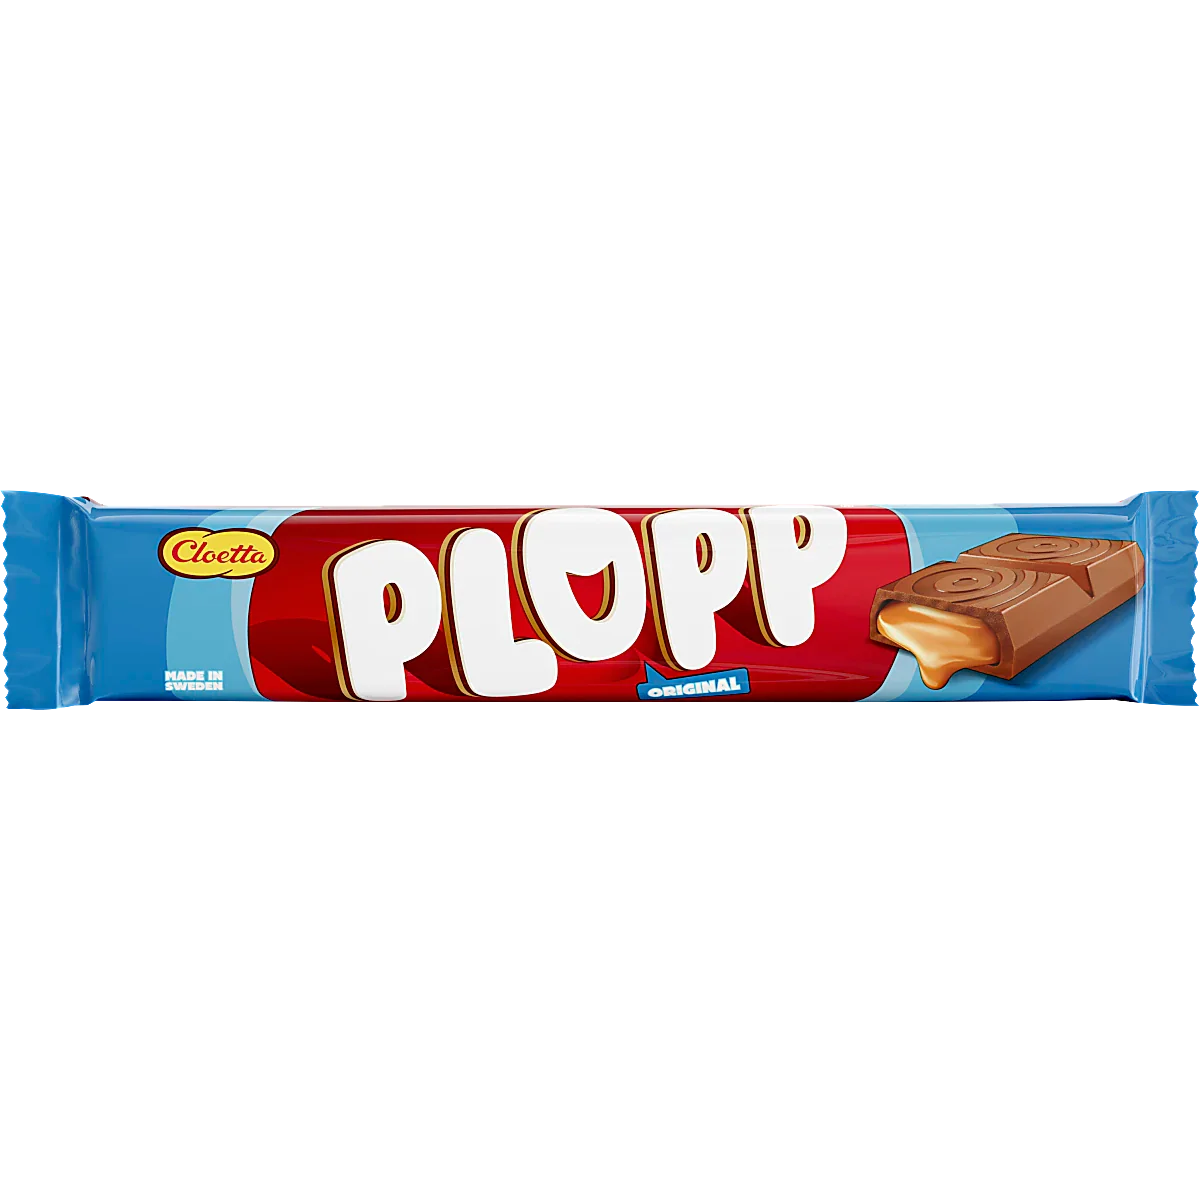 Cloetta Plopp Schokoriegel by Swedish Candy Store